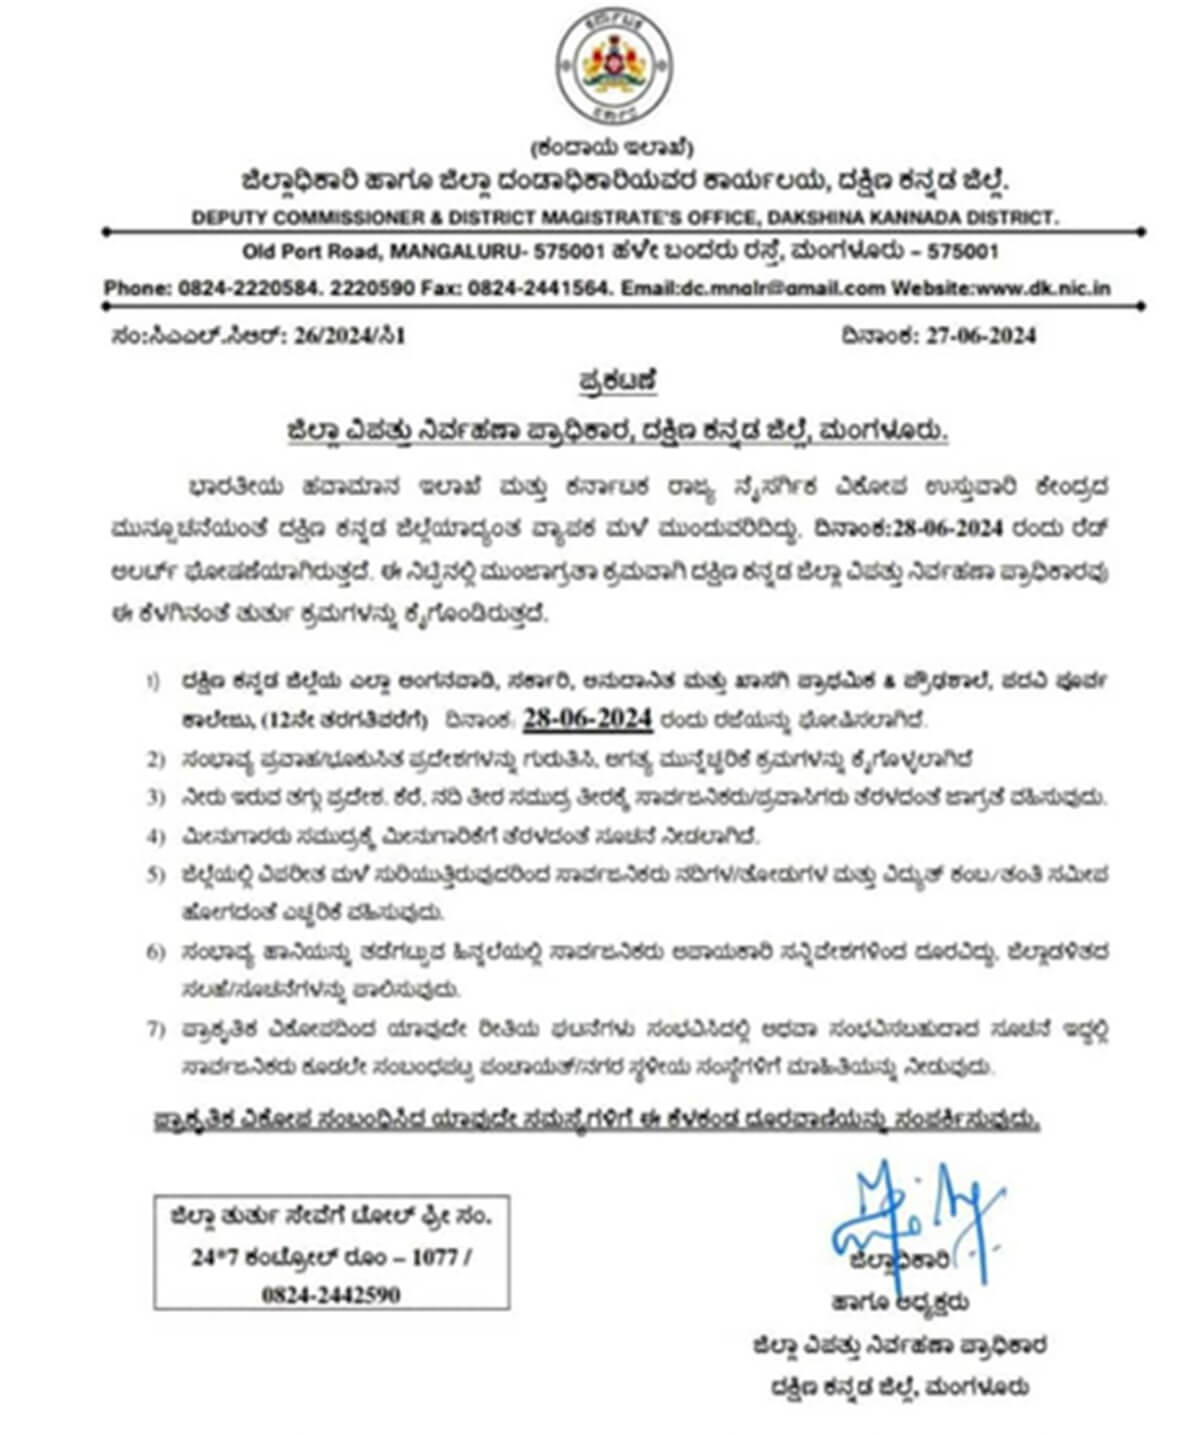 School Holiday June 28 in Dakshina Kannada for Heavy Rain Red Alert Declared Mangalore News in Kannada 